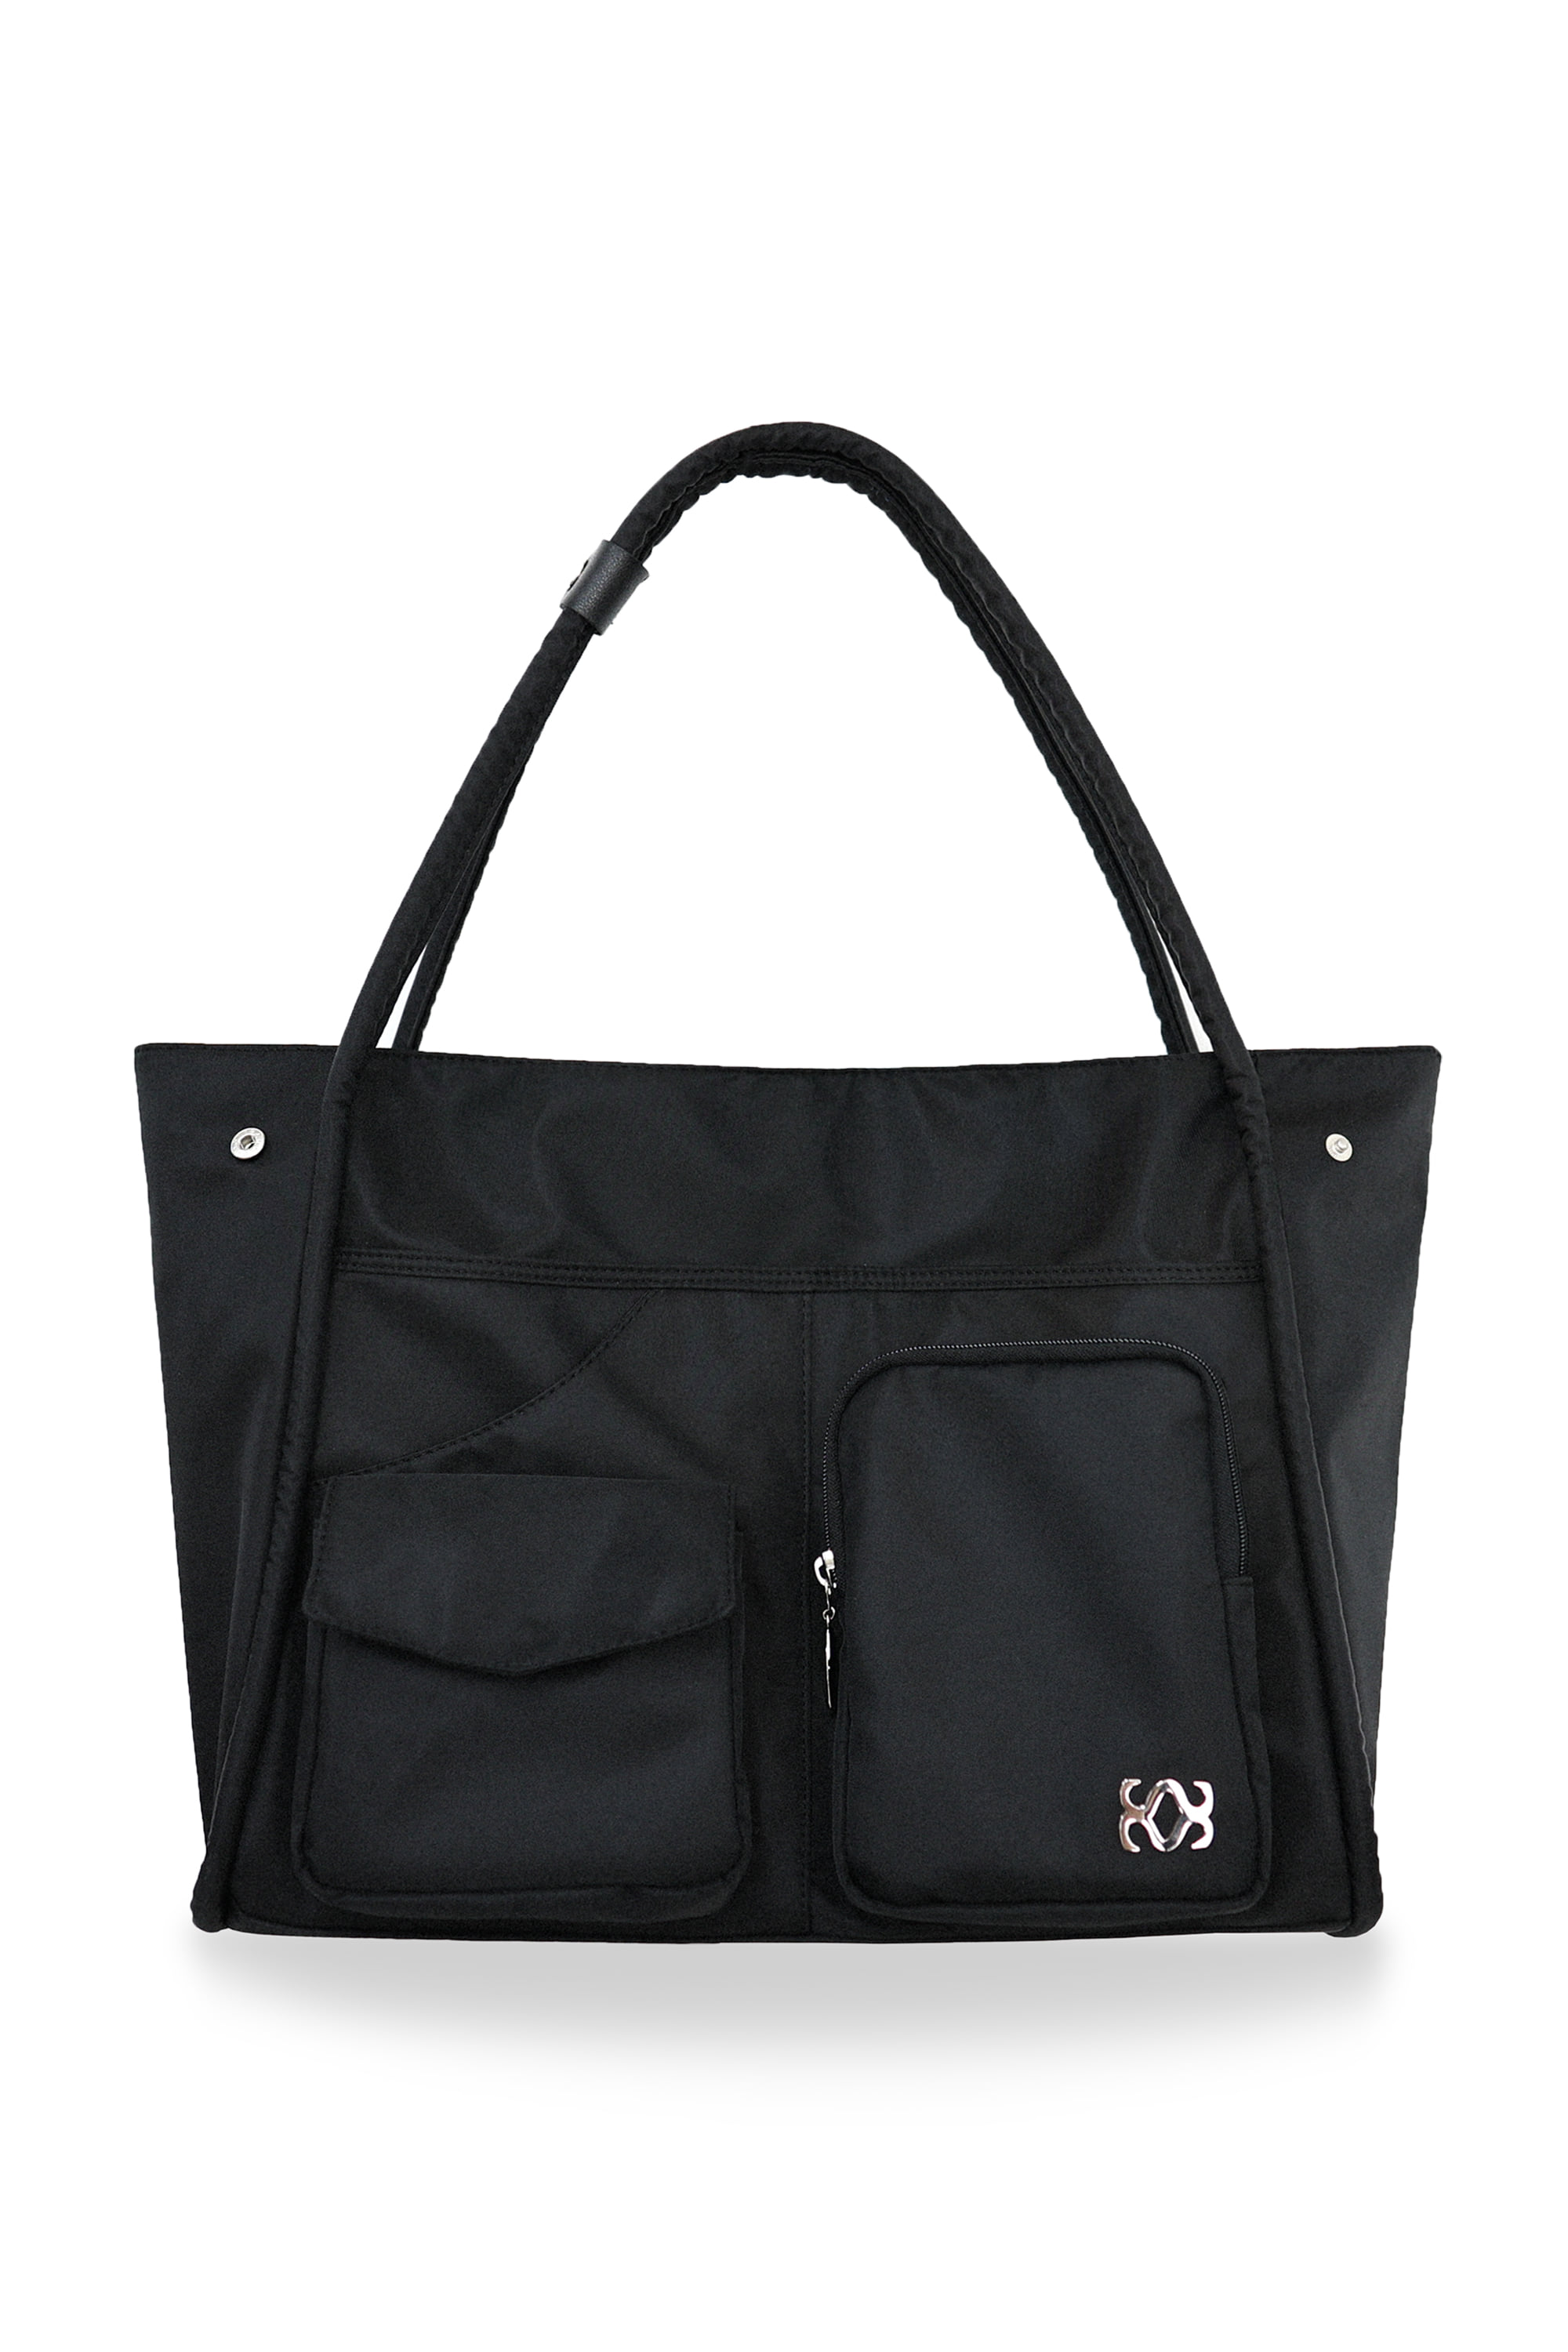 [Nylon] tidi cargo bag (all black)